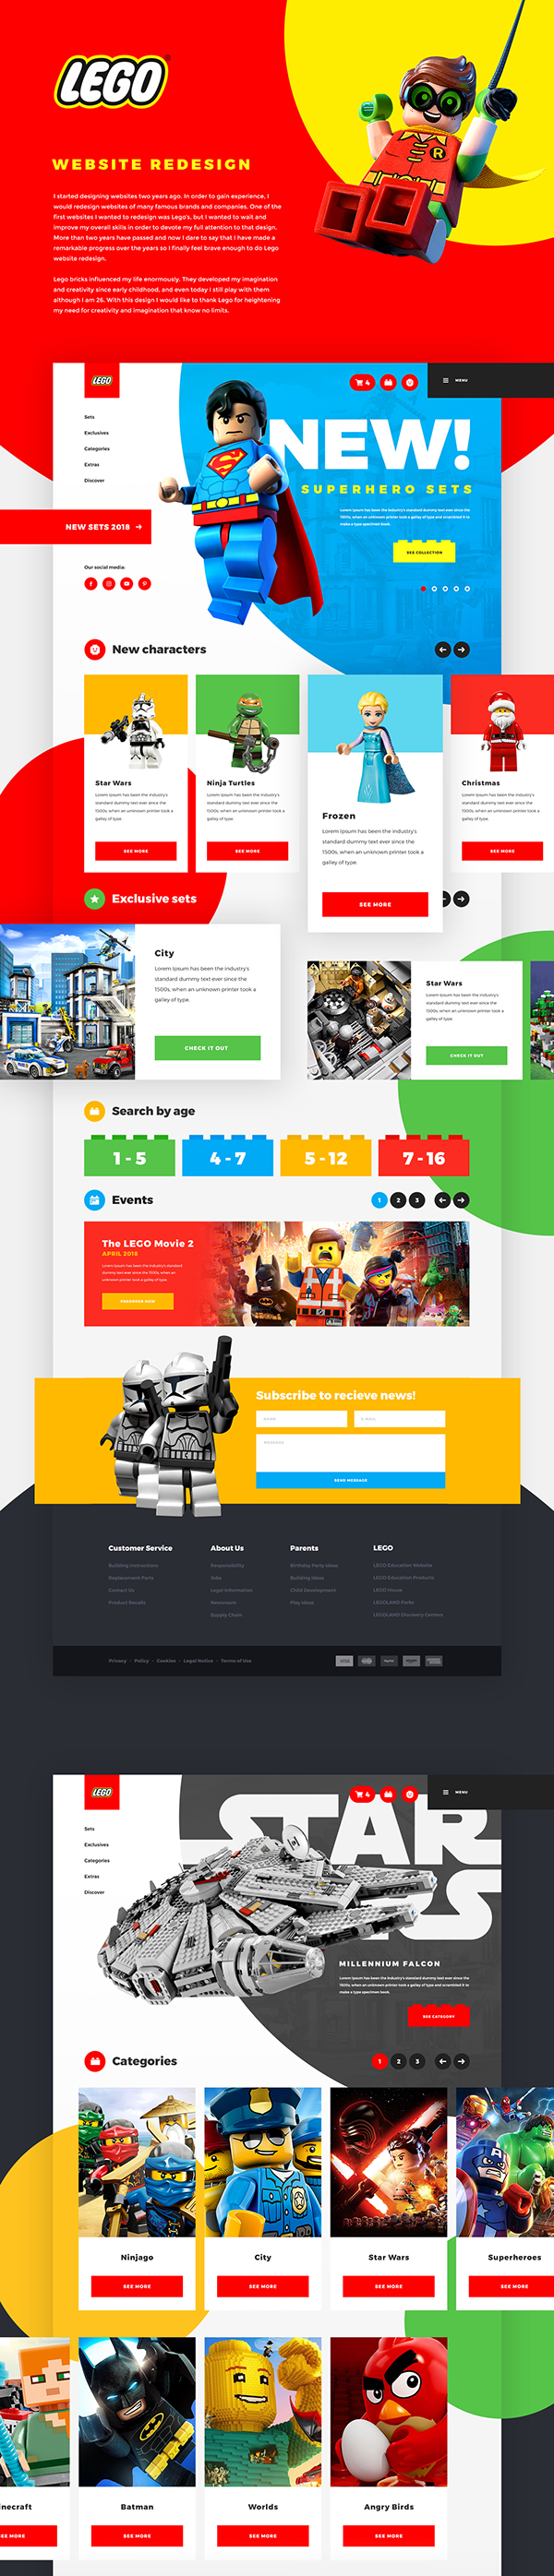 LEGO - Website Redesign